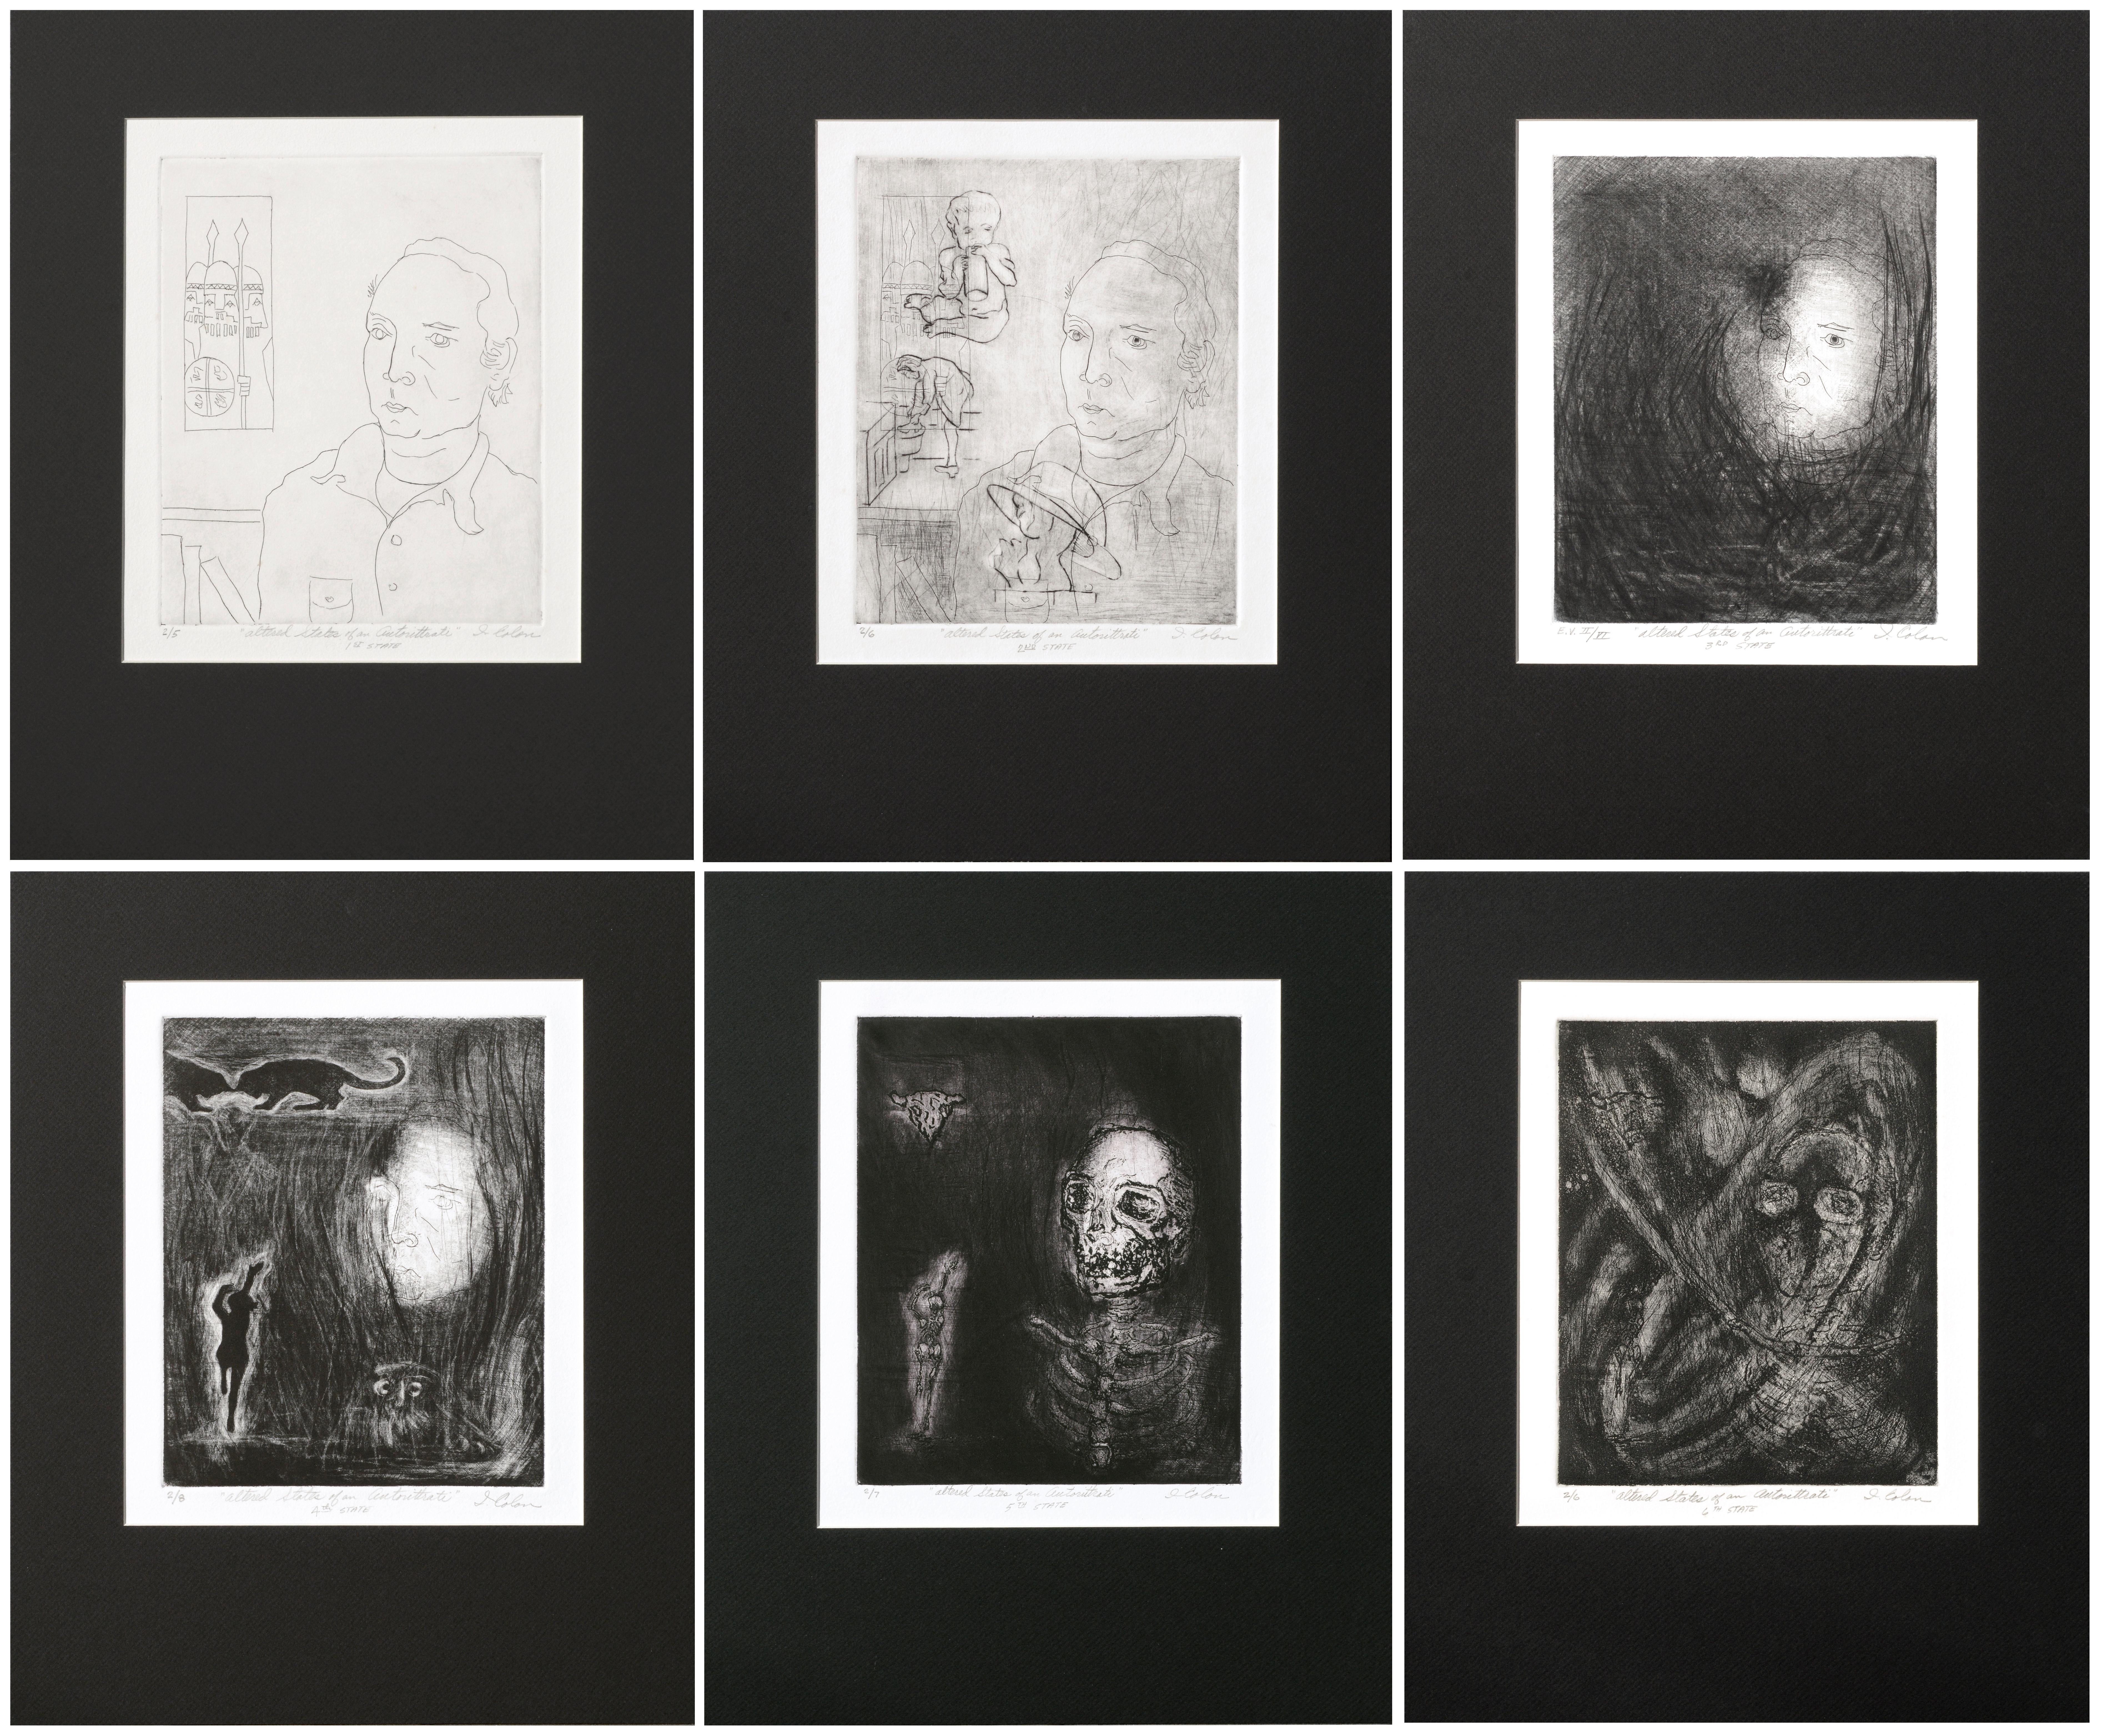 I. Colon Figurative Print – "Altered States of an Autorittrati", Modernist Self-Portrait Complete Series (6)